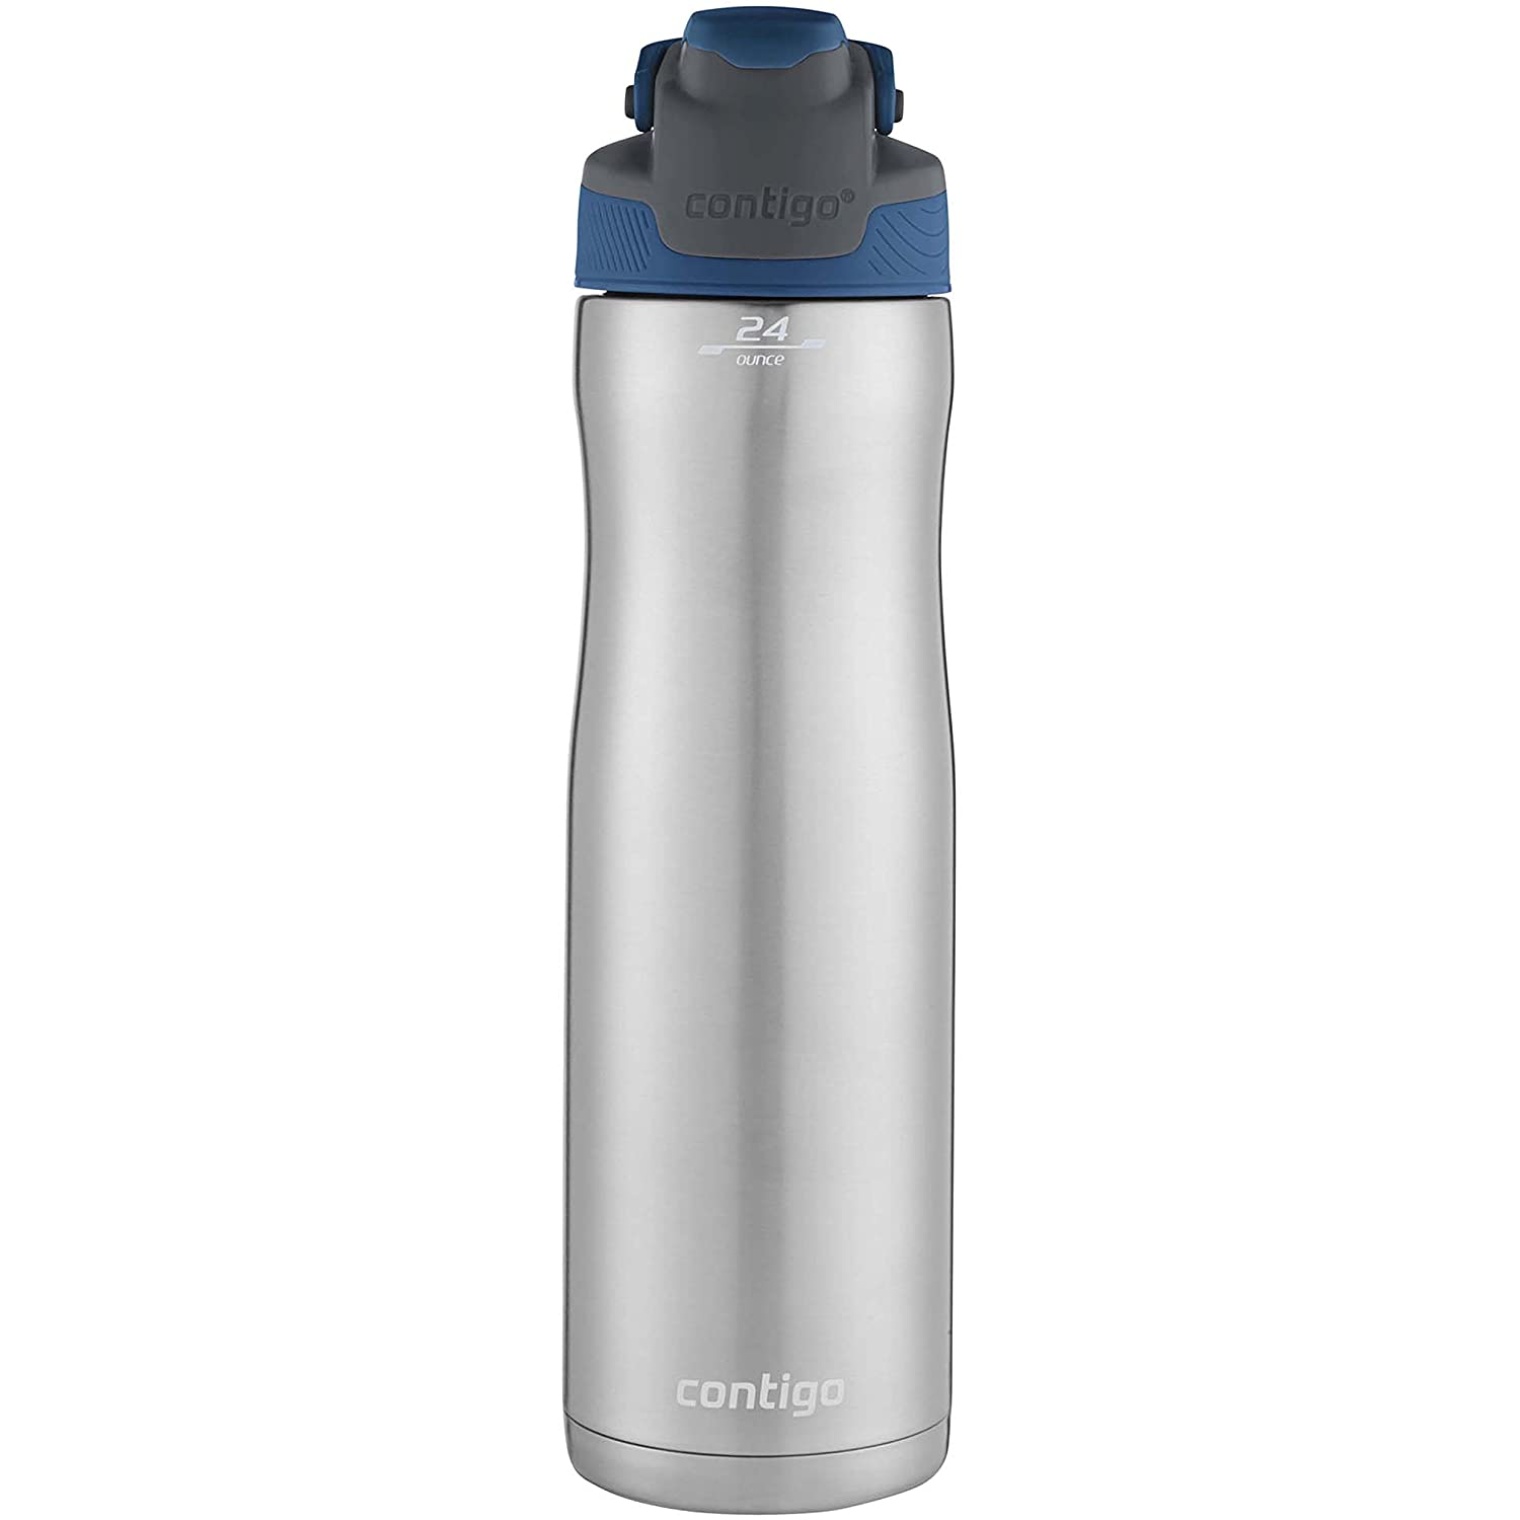 Contigo AutoSeal Chill Monaco 24-fl oz Stainless Steel Water Bottle at